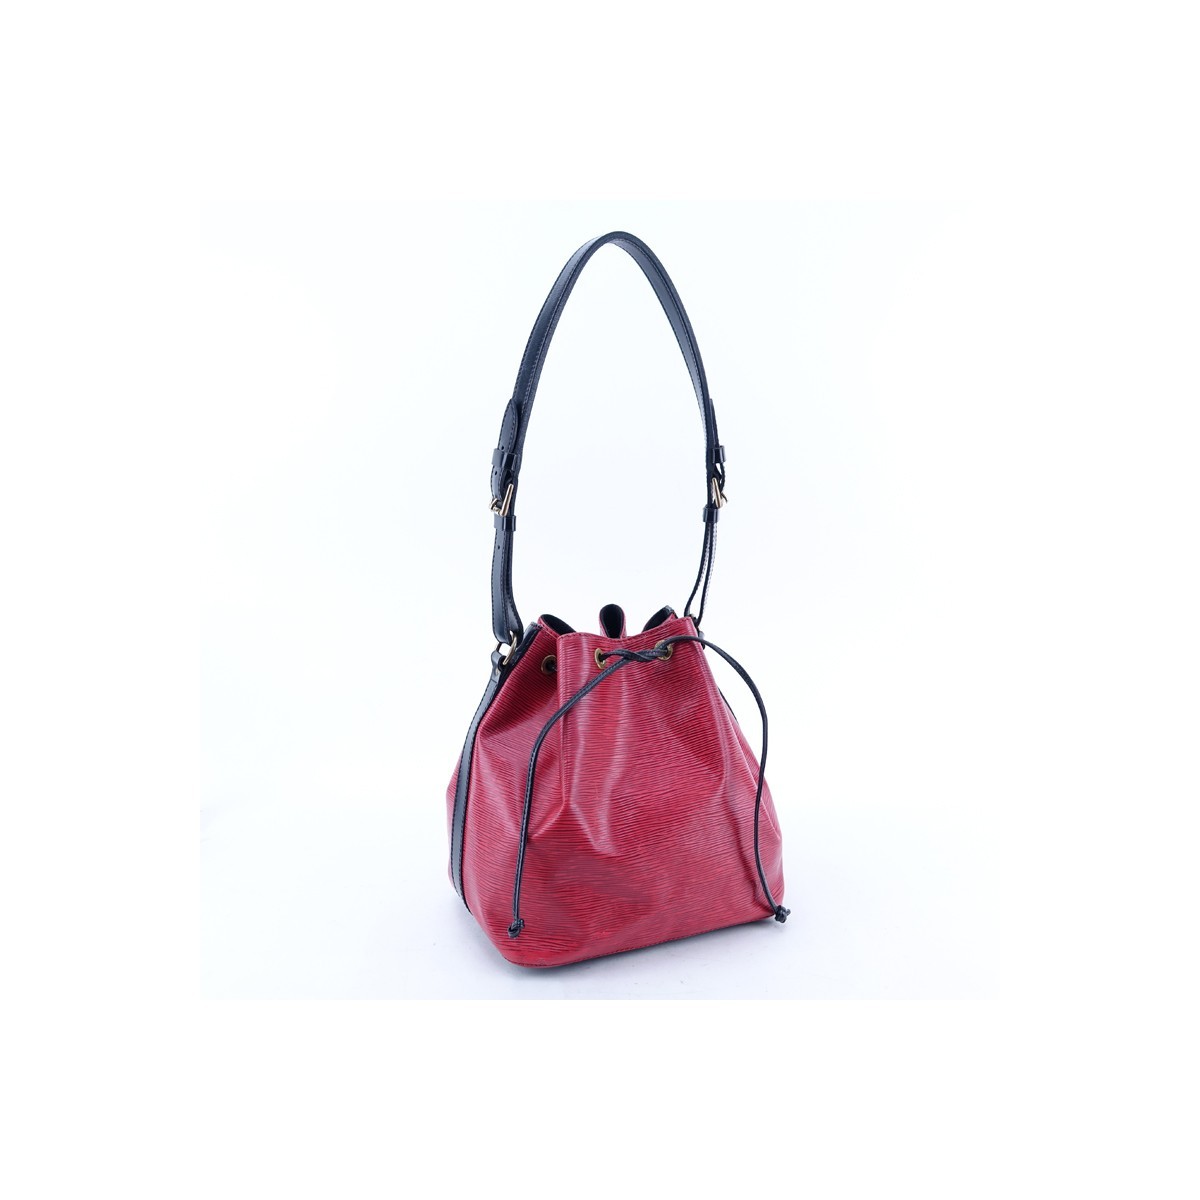 Louis Vuitton Red/Black Epi Leather Noe Bicolor PM Bag. Golden brass hardware, black suede interior.